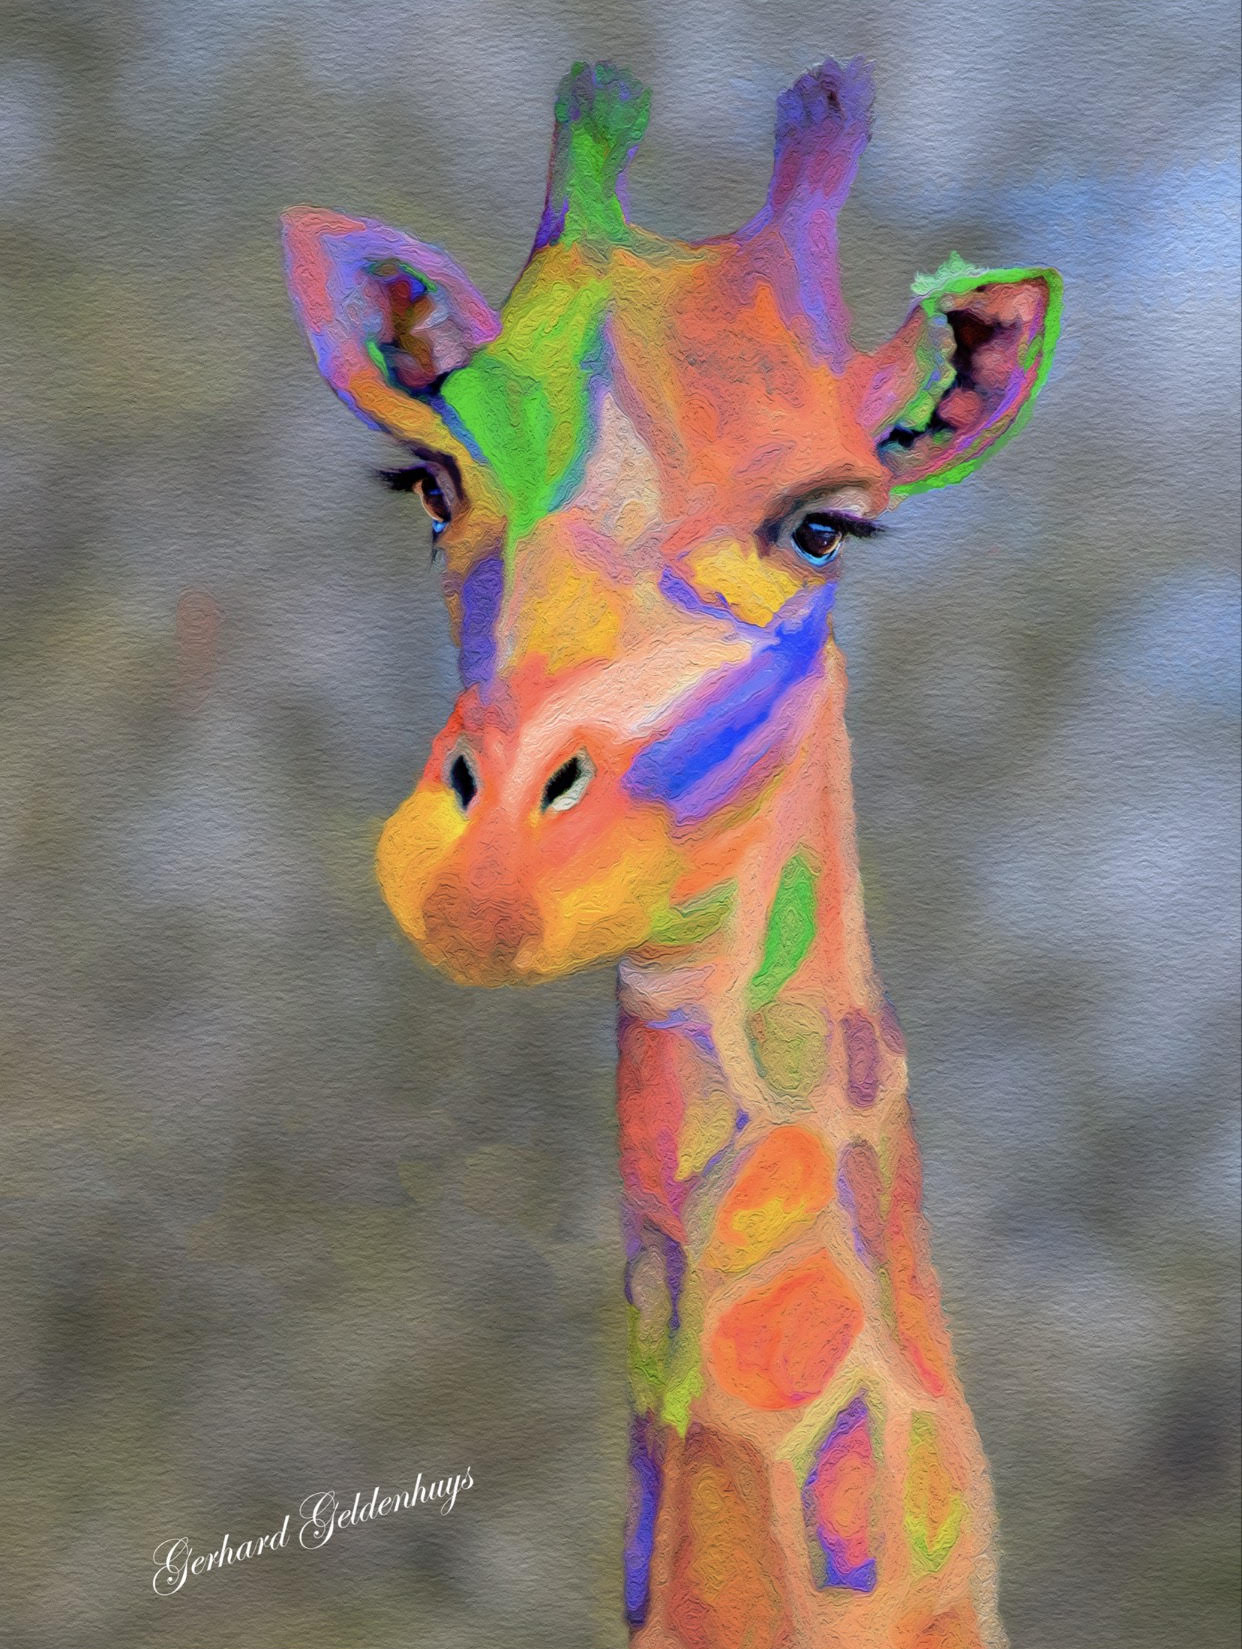 Giraffe by Gerhard Geldenhuys